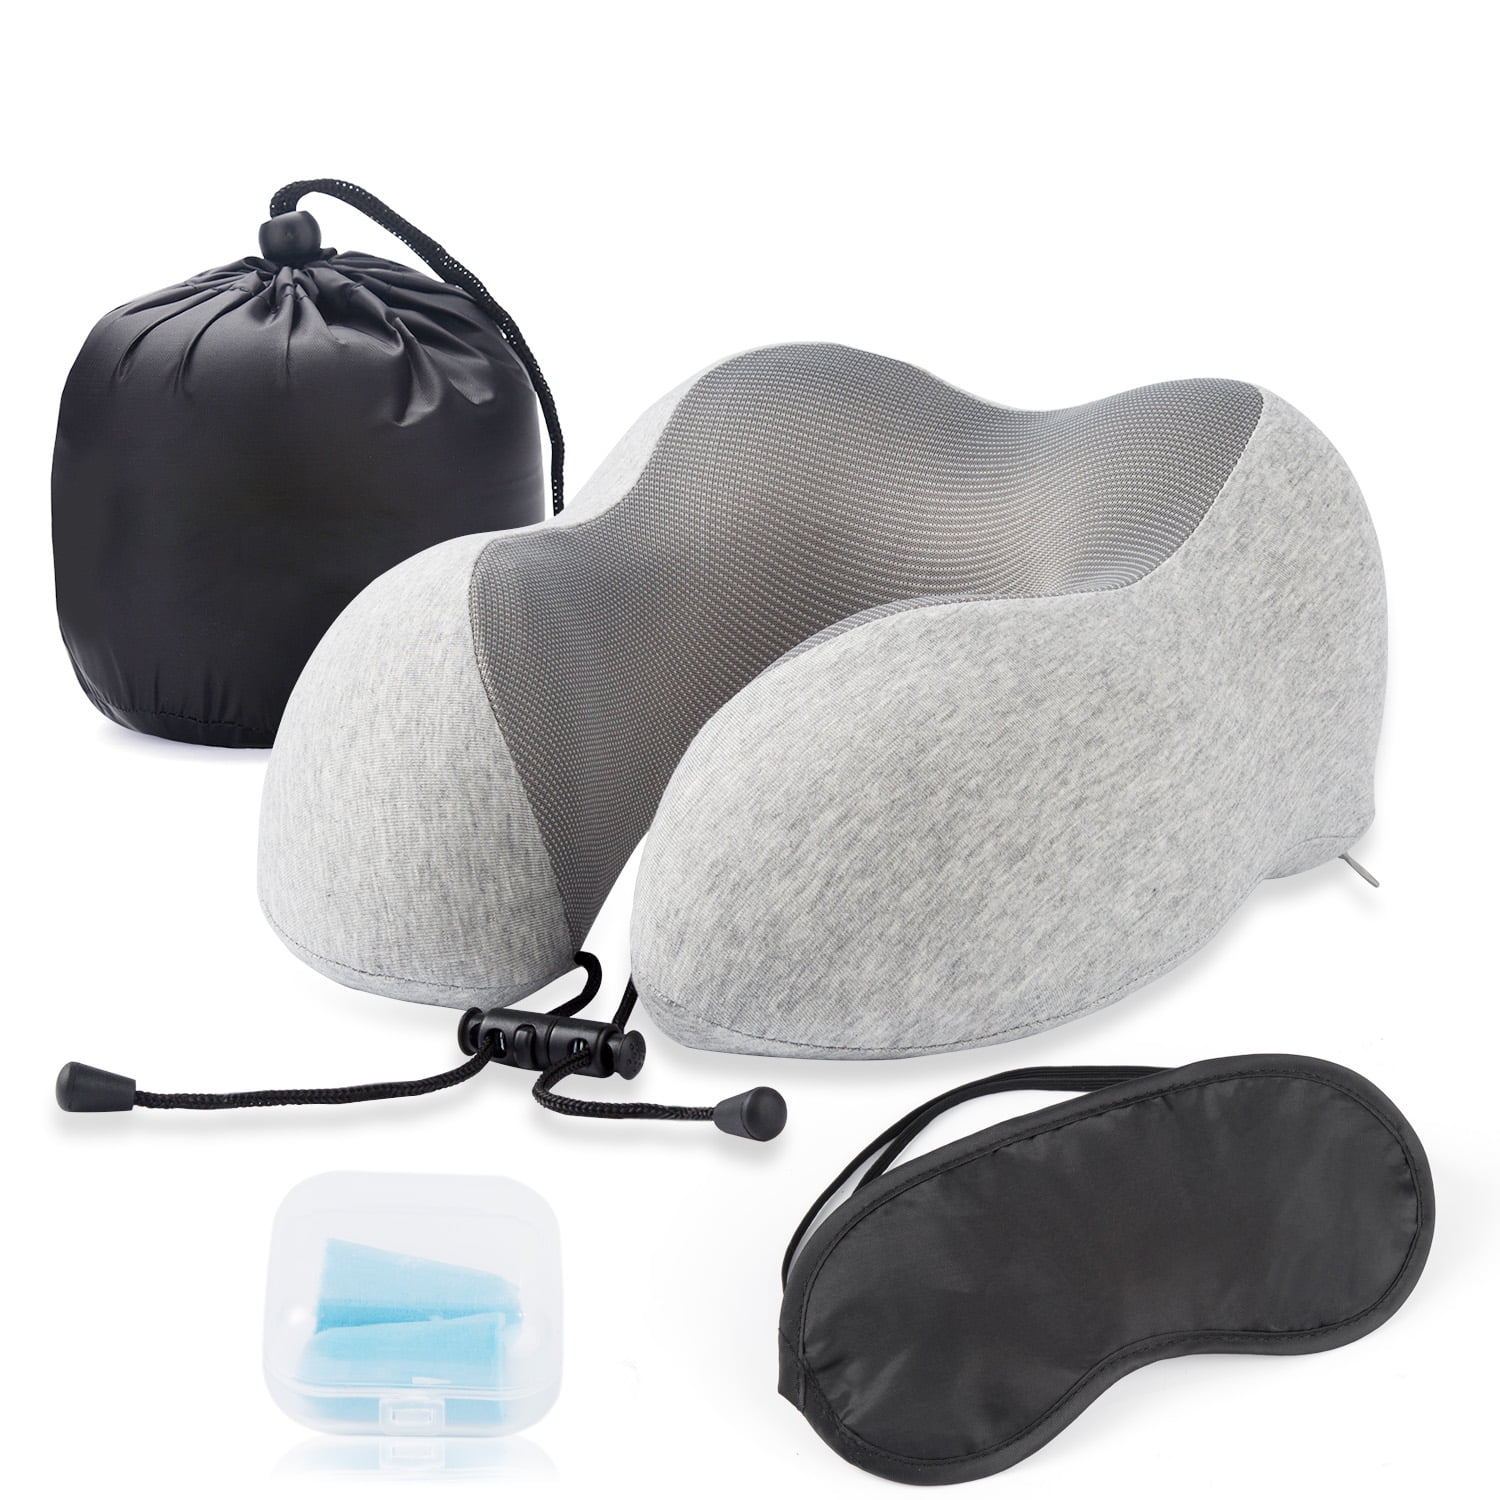 Earplugs TraverseBySimpson Travel Pillow Travel Kit Including Matching Color Eye Masks 100% Pure Memory Foam Neck Pillow Valvet Cover & Nylon Bag Machine Washable Grey Matching Color Eye Mask